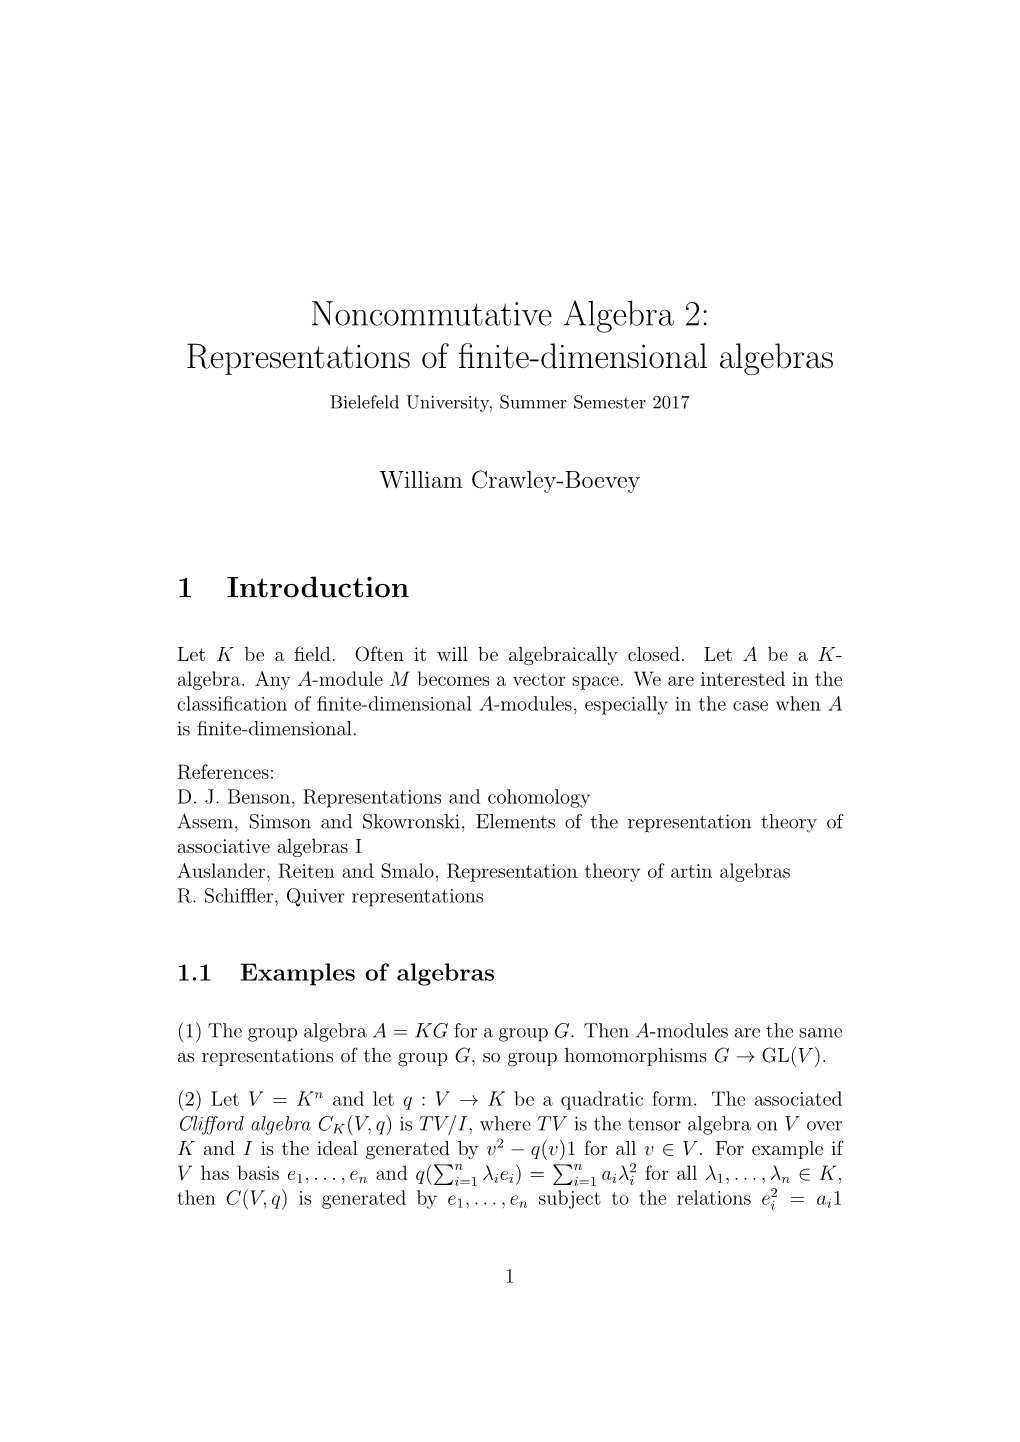 Noncommutative Algebra 2: Representations of Finite-Dimensional Algebras